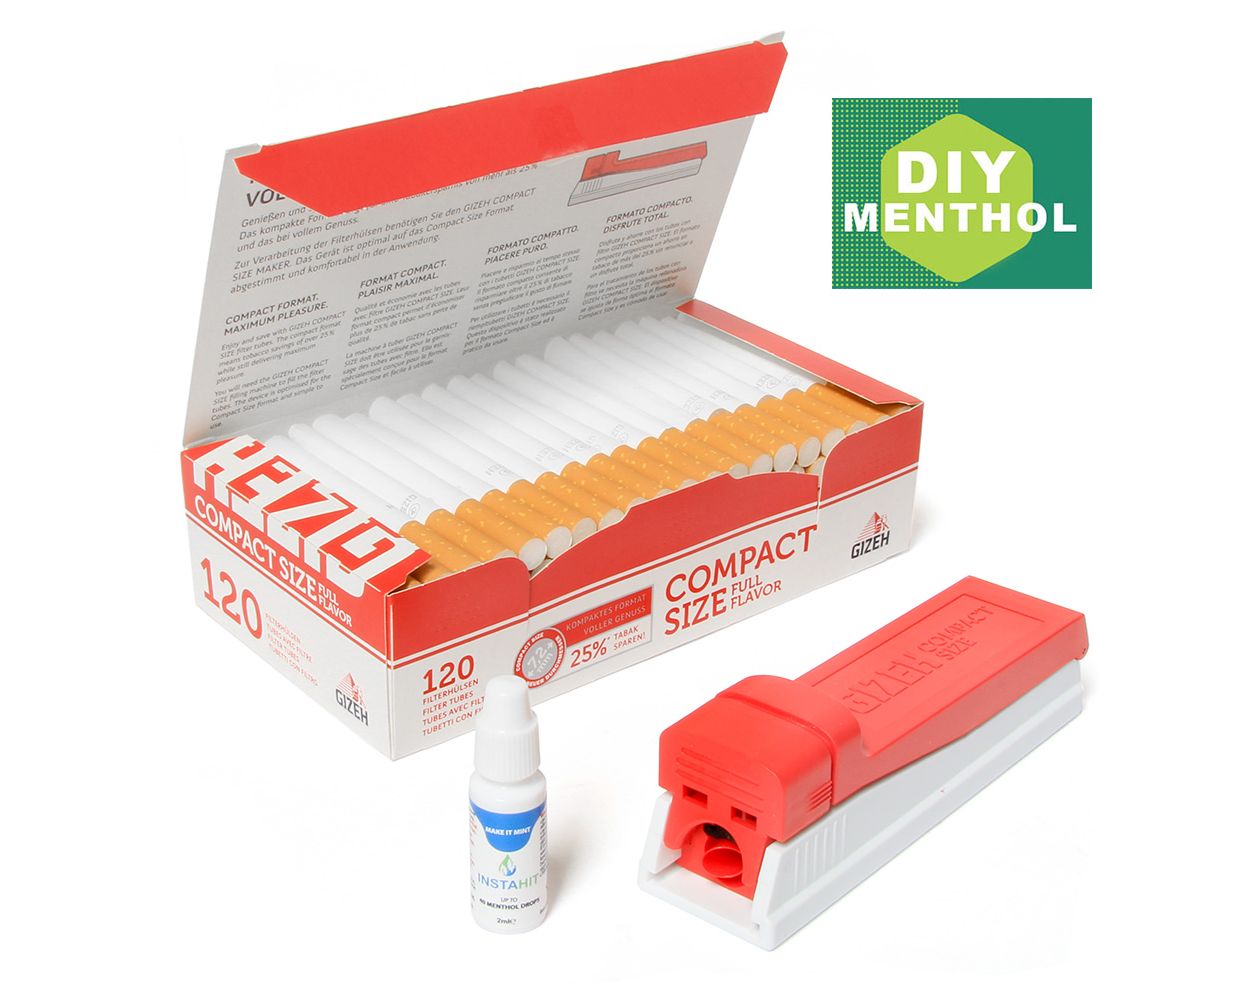 Gizeh Compact Menthol Cigarette Tubing Starter Kit